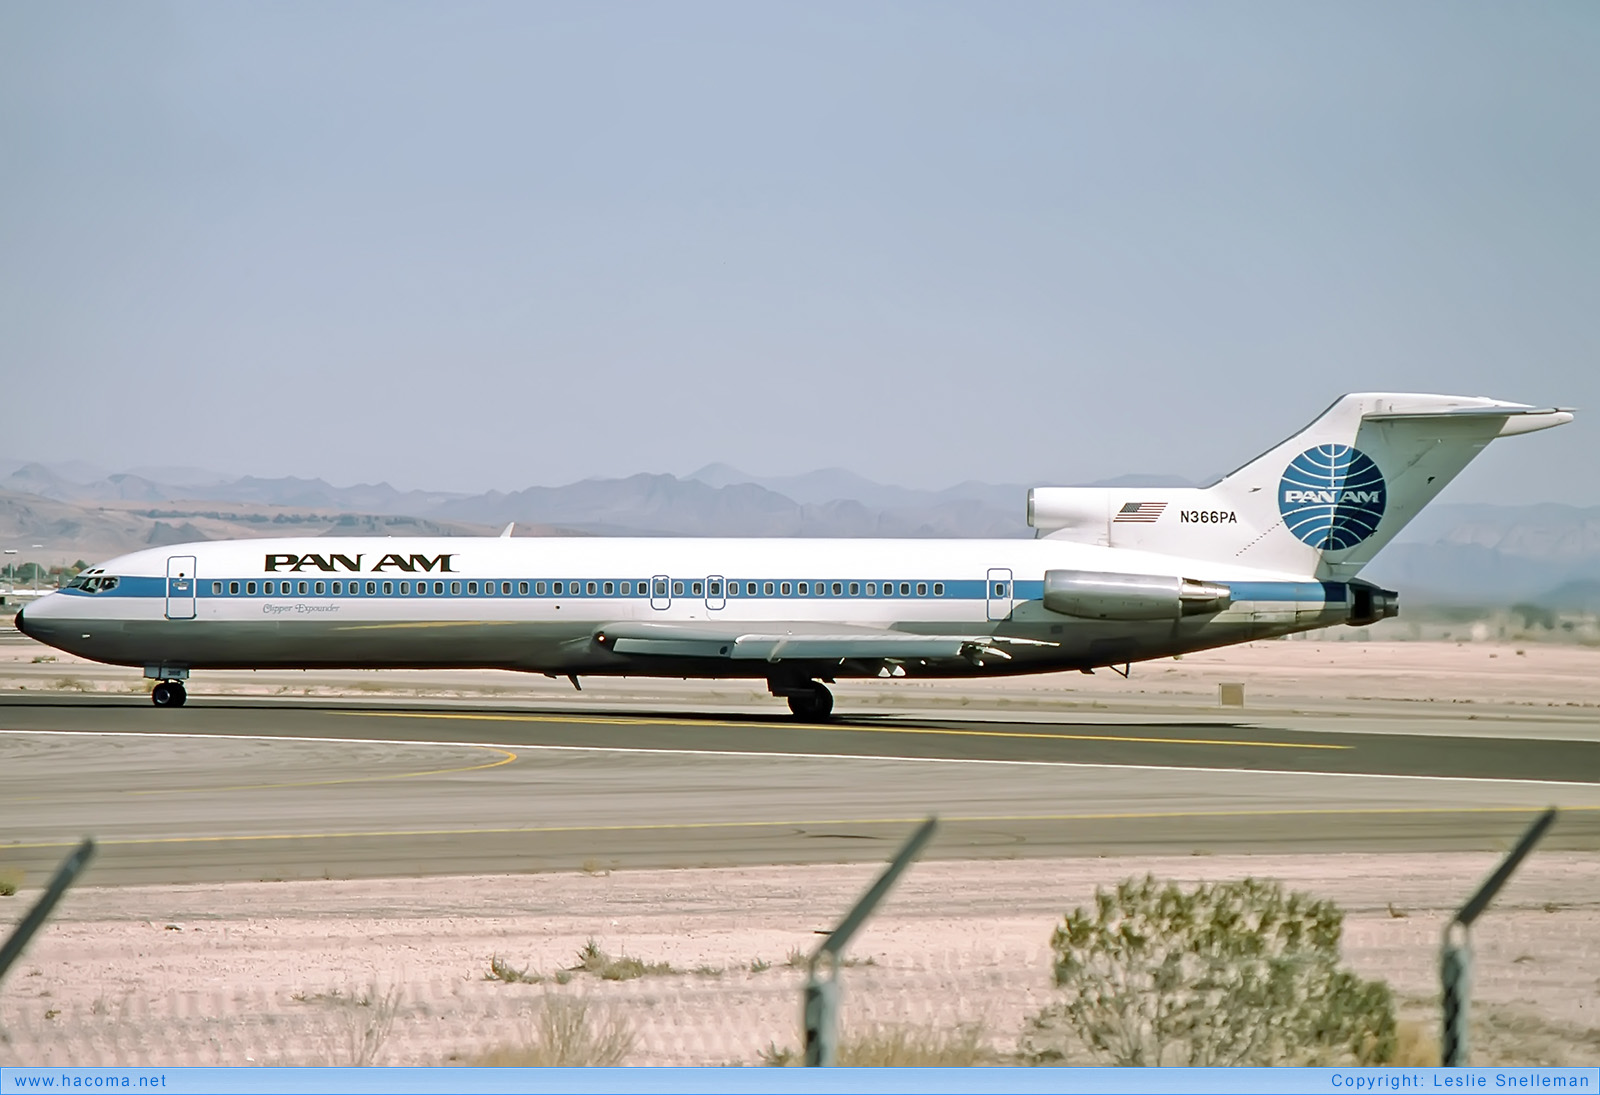 Foto von N366PA - Pan Am Clipper Expounder - McCarran International Airport - 08.10.1982